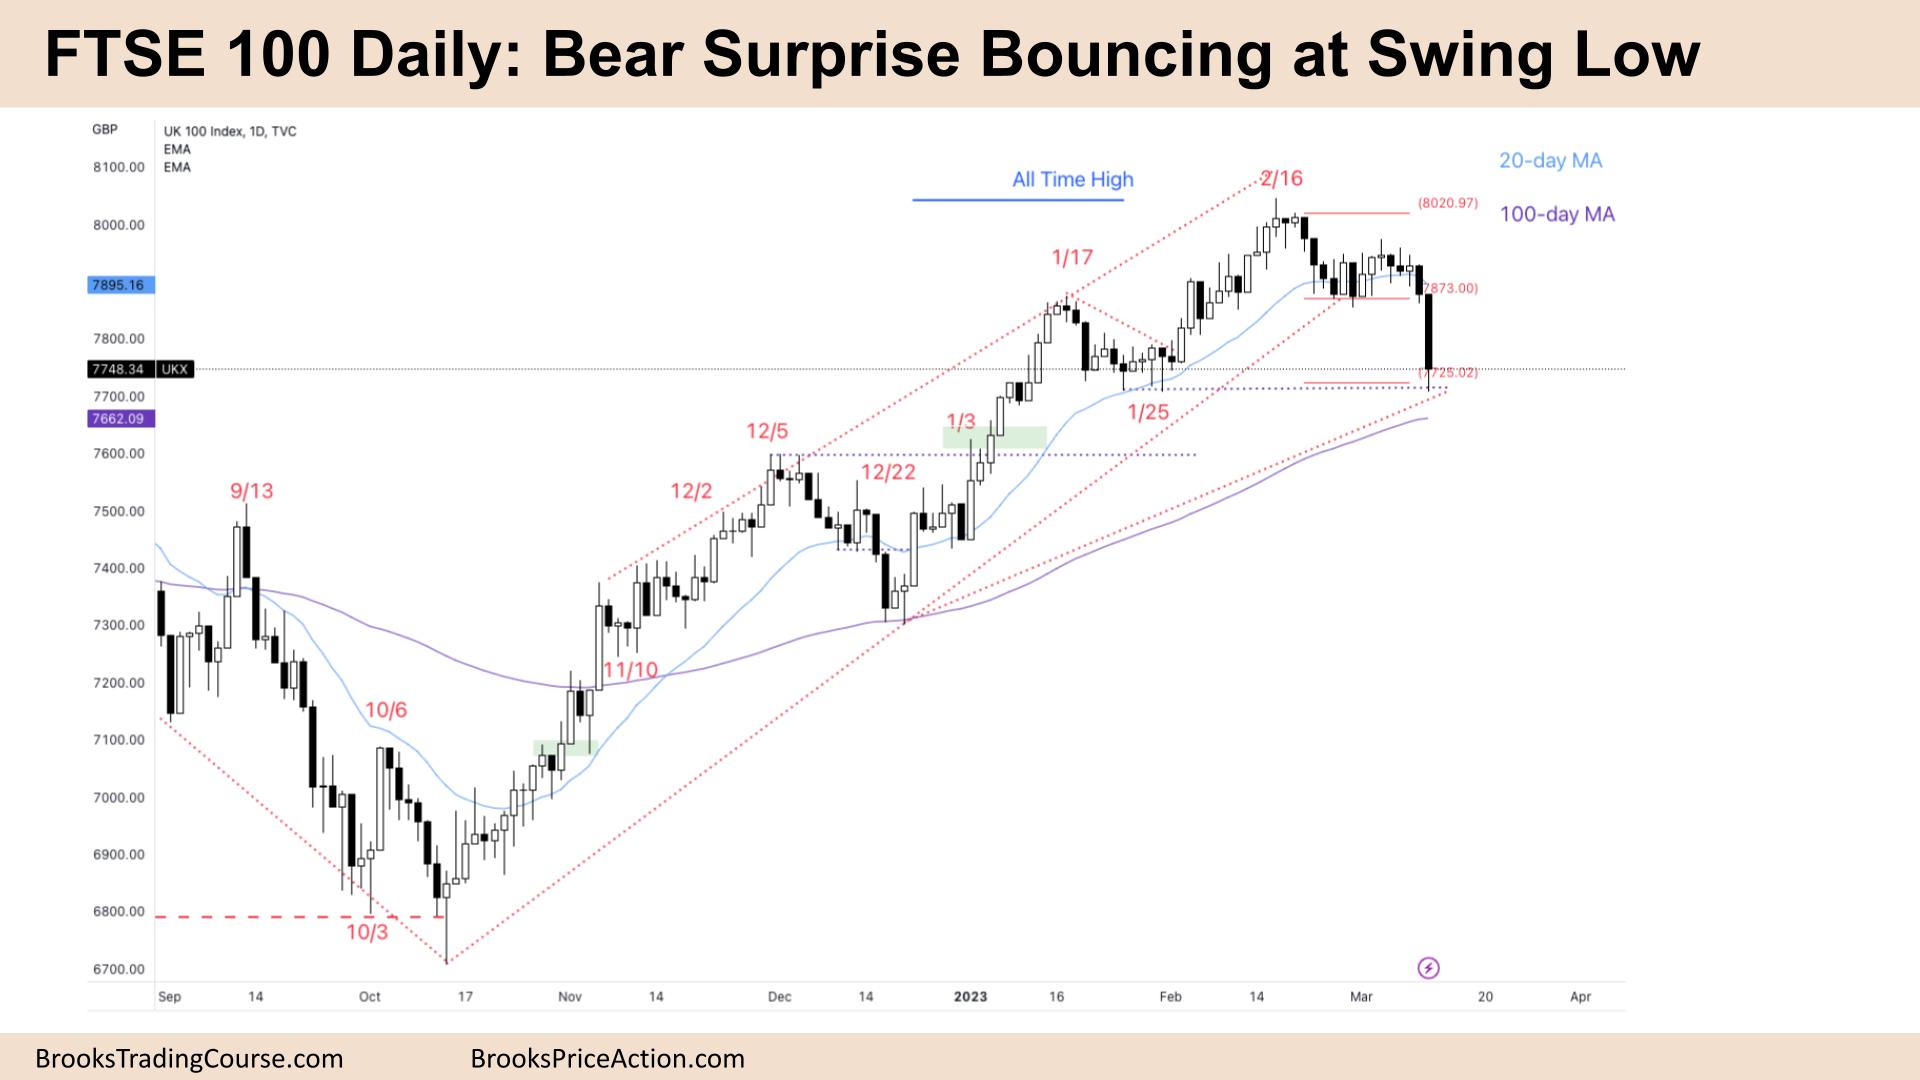 FTSE 100 Bear Surprise Bouncing at Swing Low